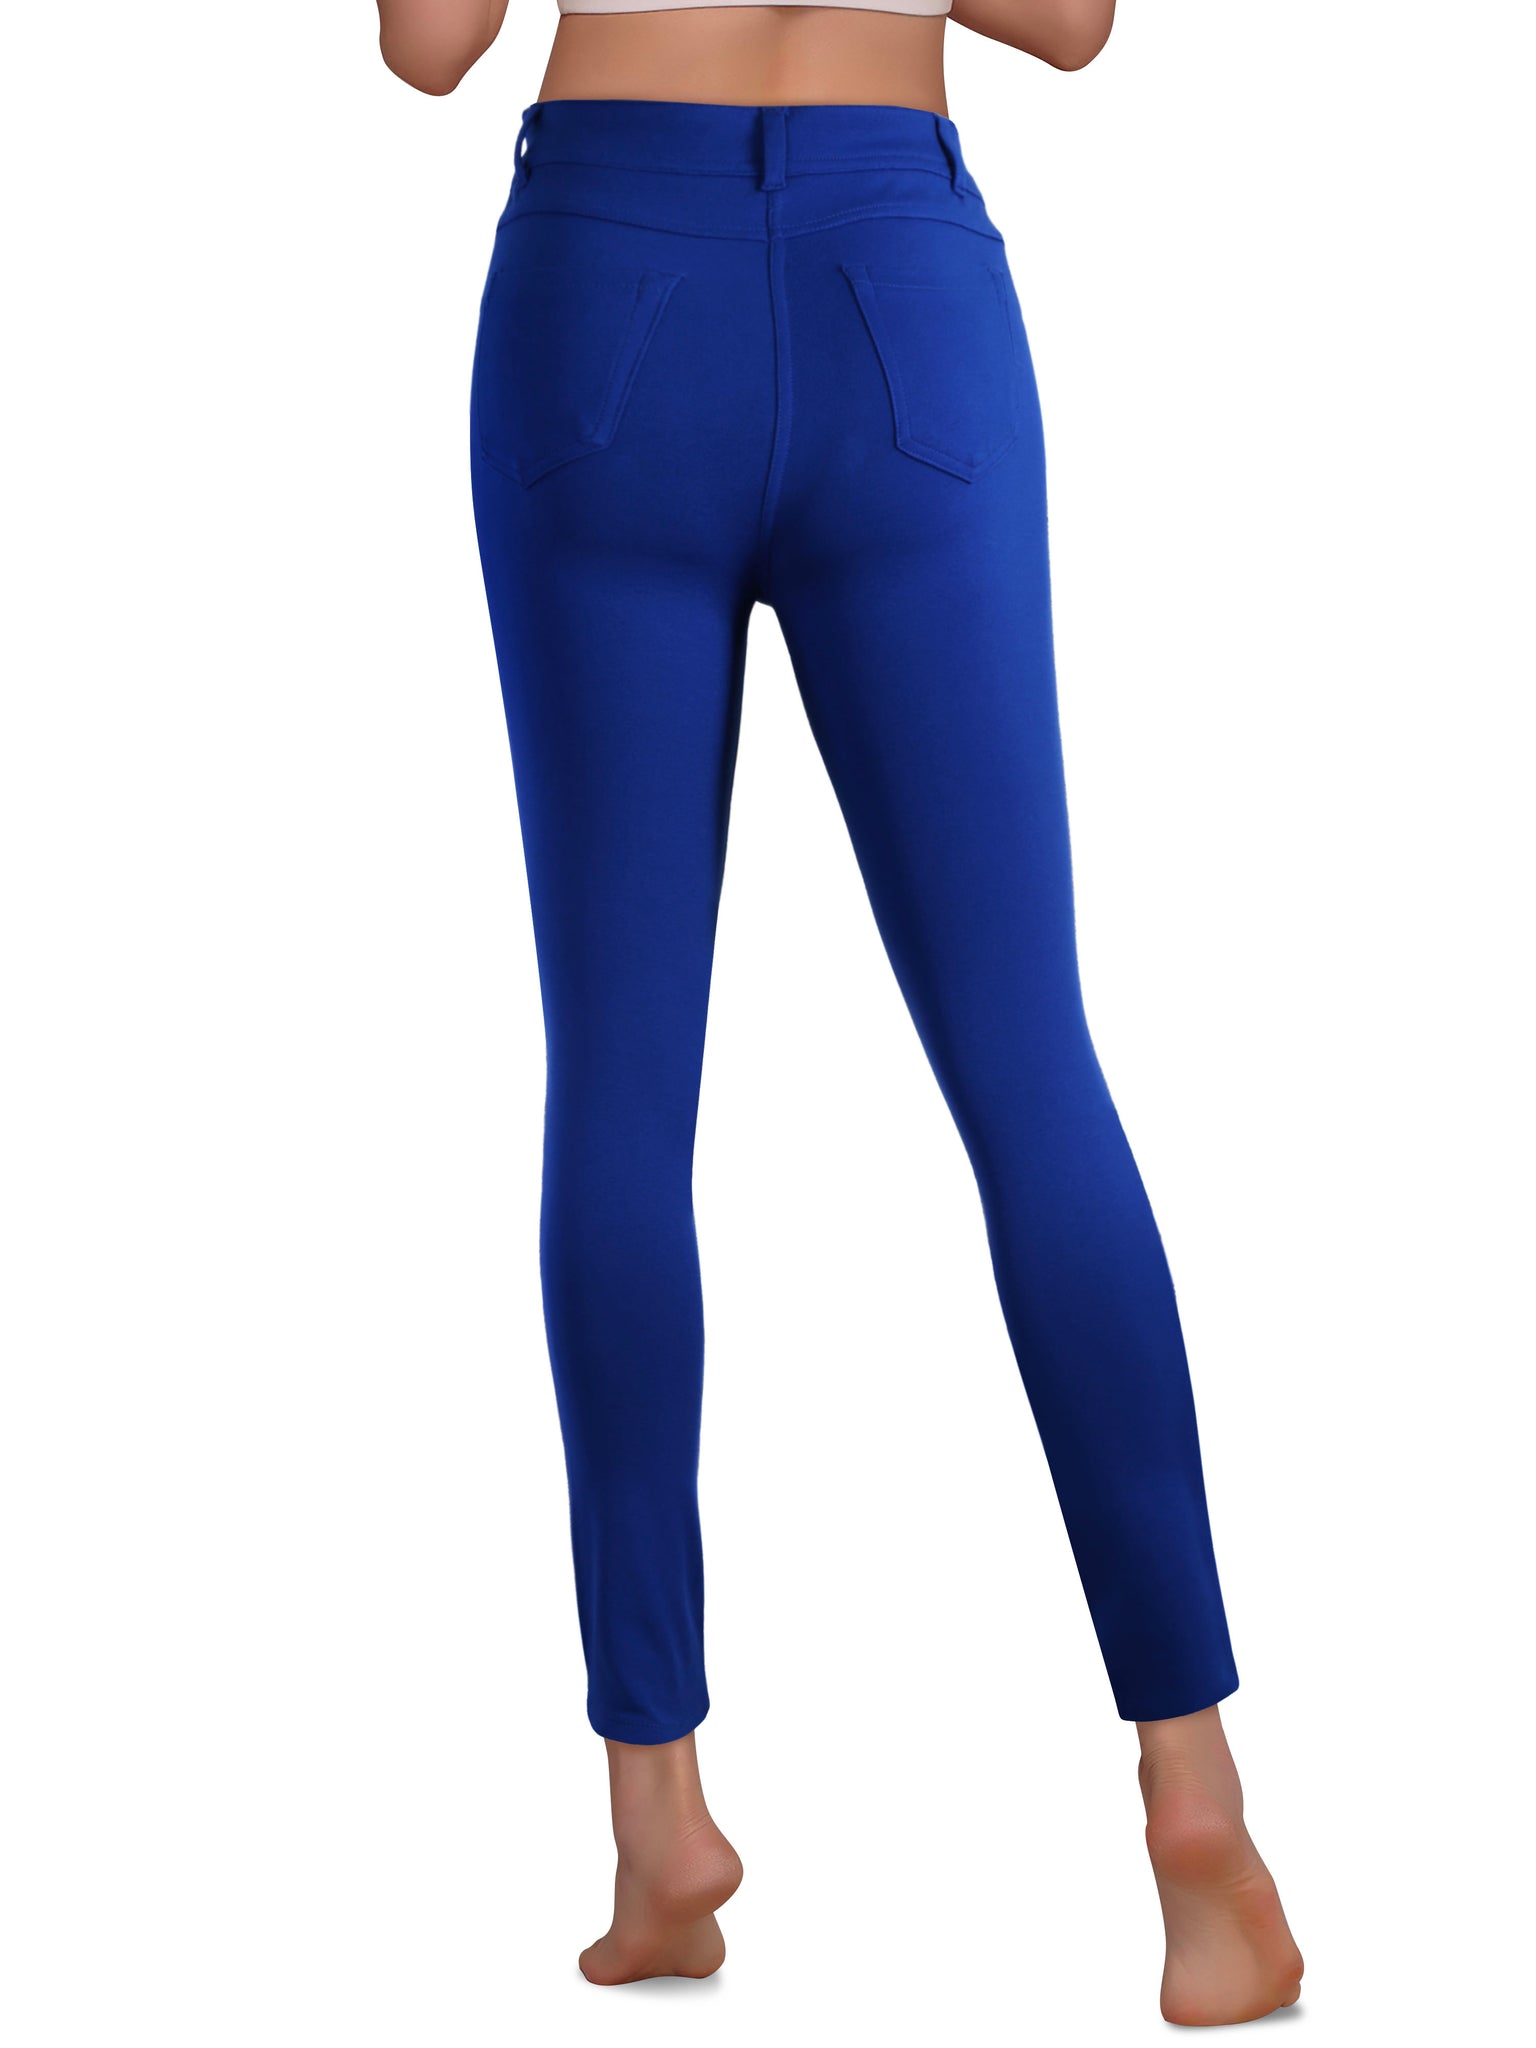 XS-3XL Lace Side High Waist Imitation Blue Jeans Leggings Women's Elastic  Pants 